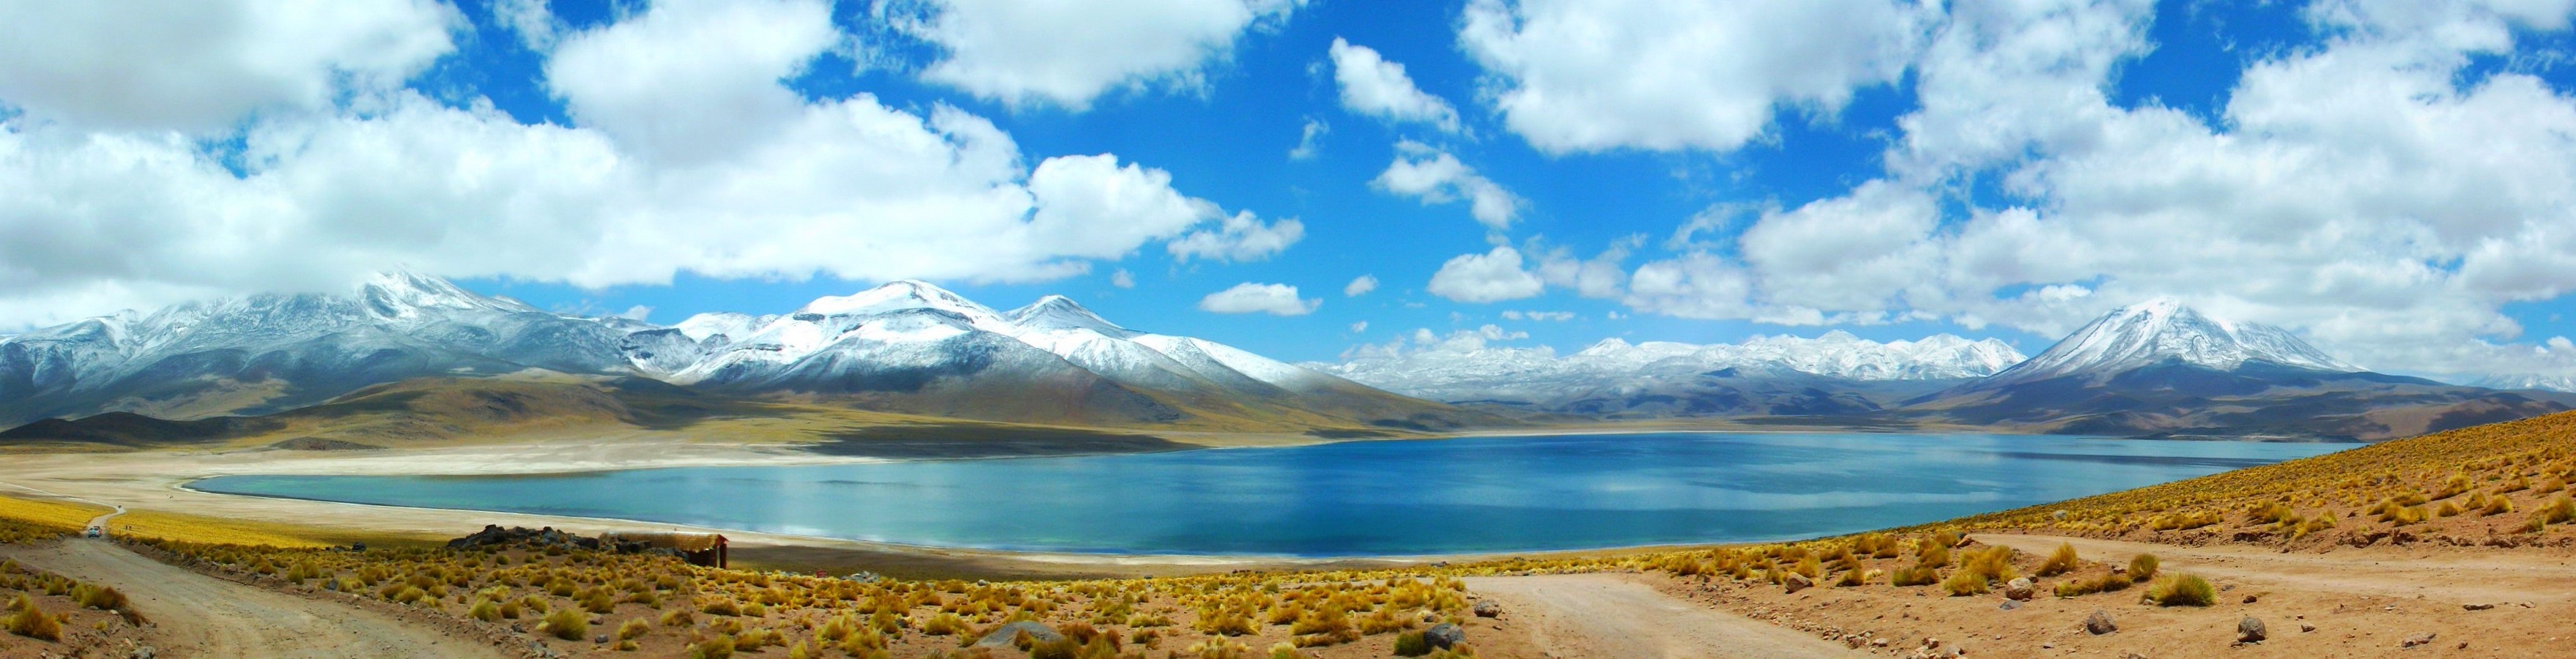 nature, Landscape, Photography, Panoramas, Lake, Mountains, Clouds, Snowy Peak, Dirt Road, Shrubs, Atacama Desert, Chile Wallpaper